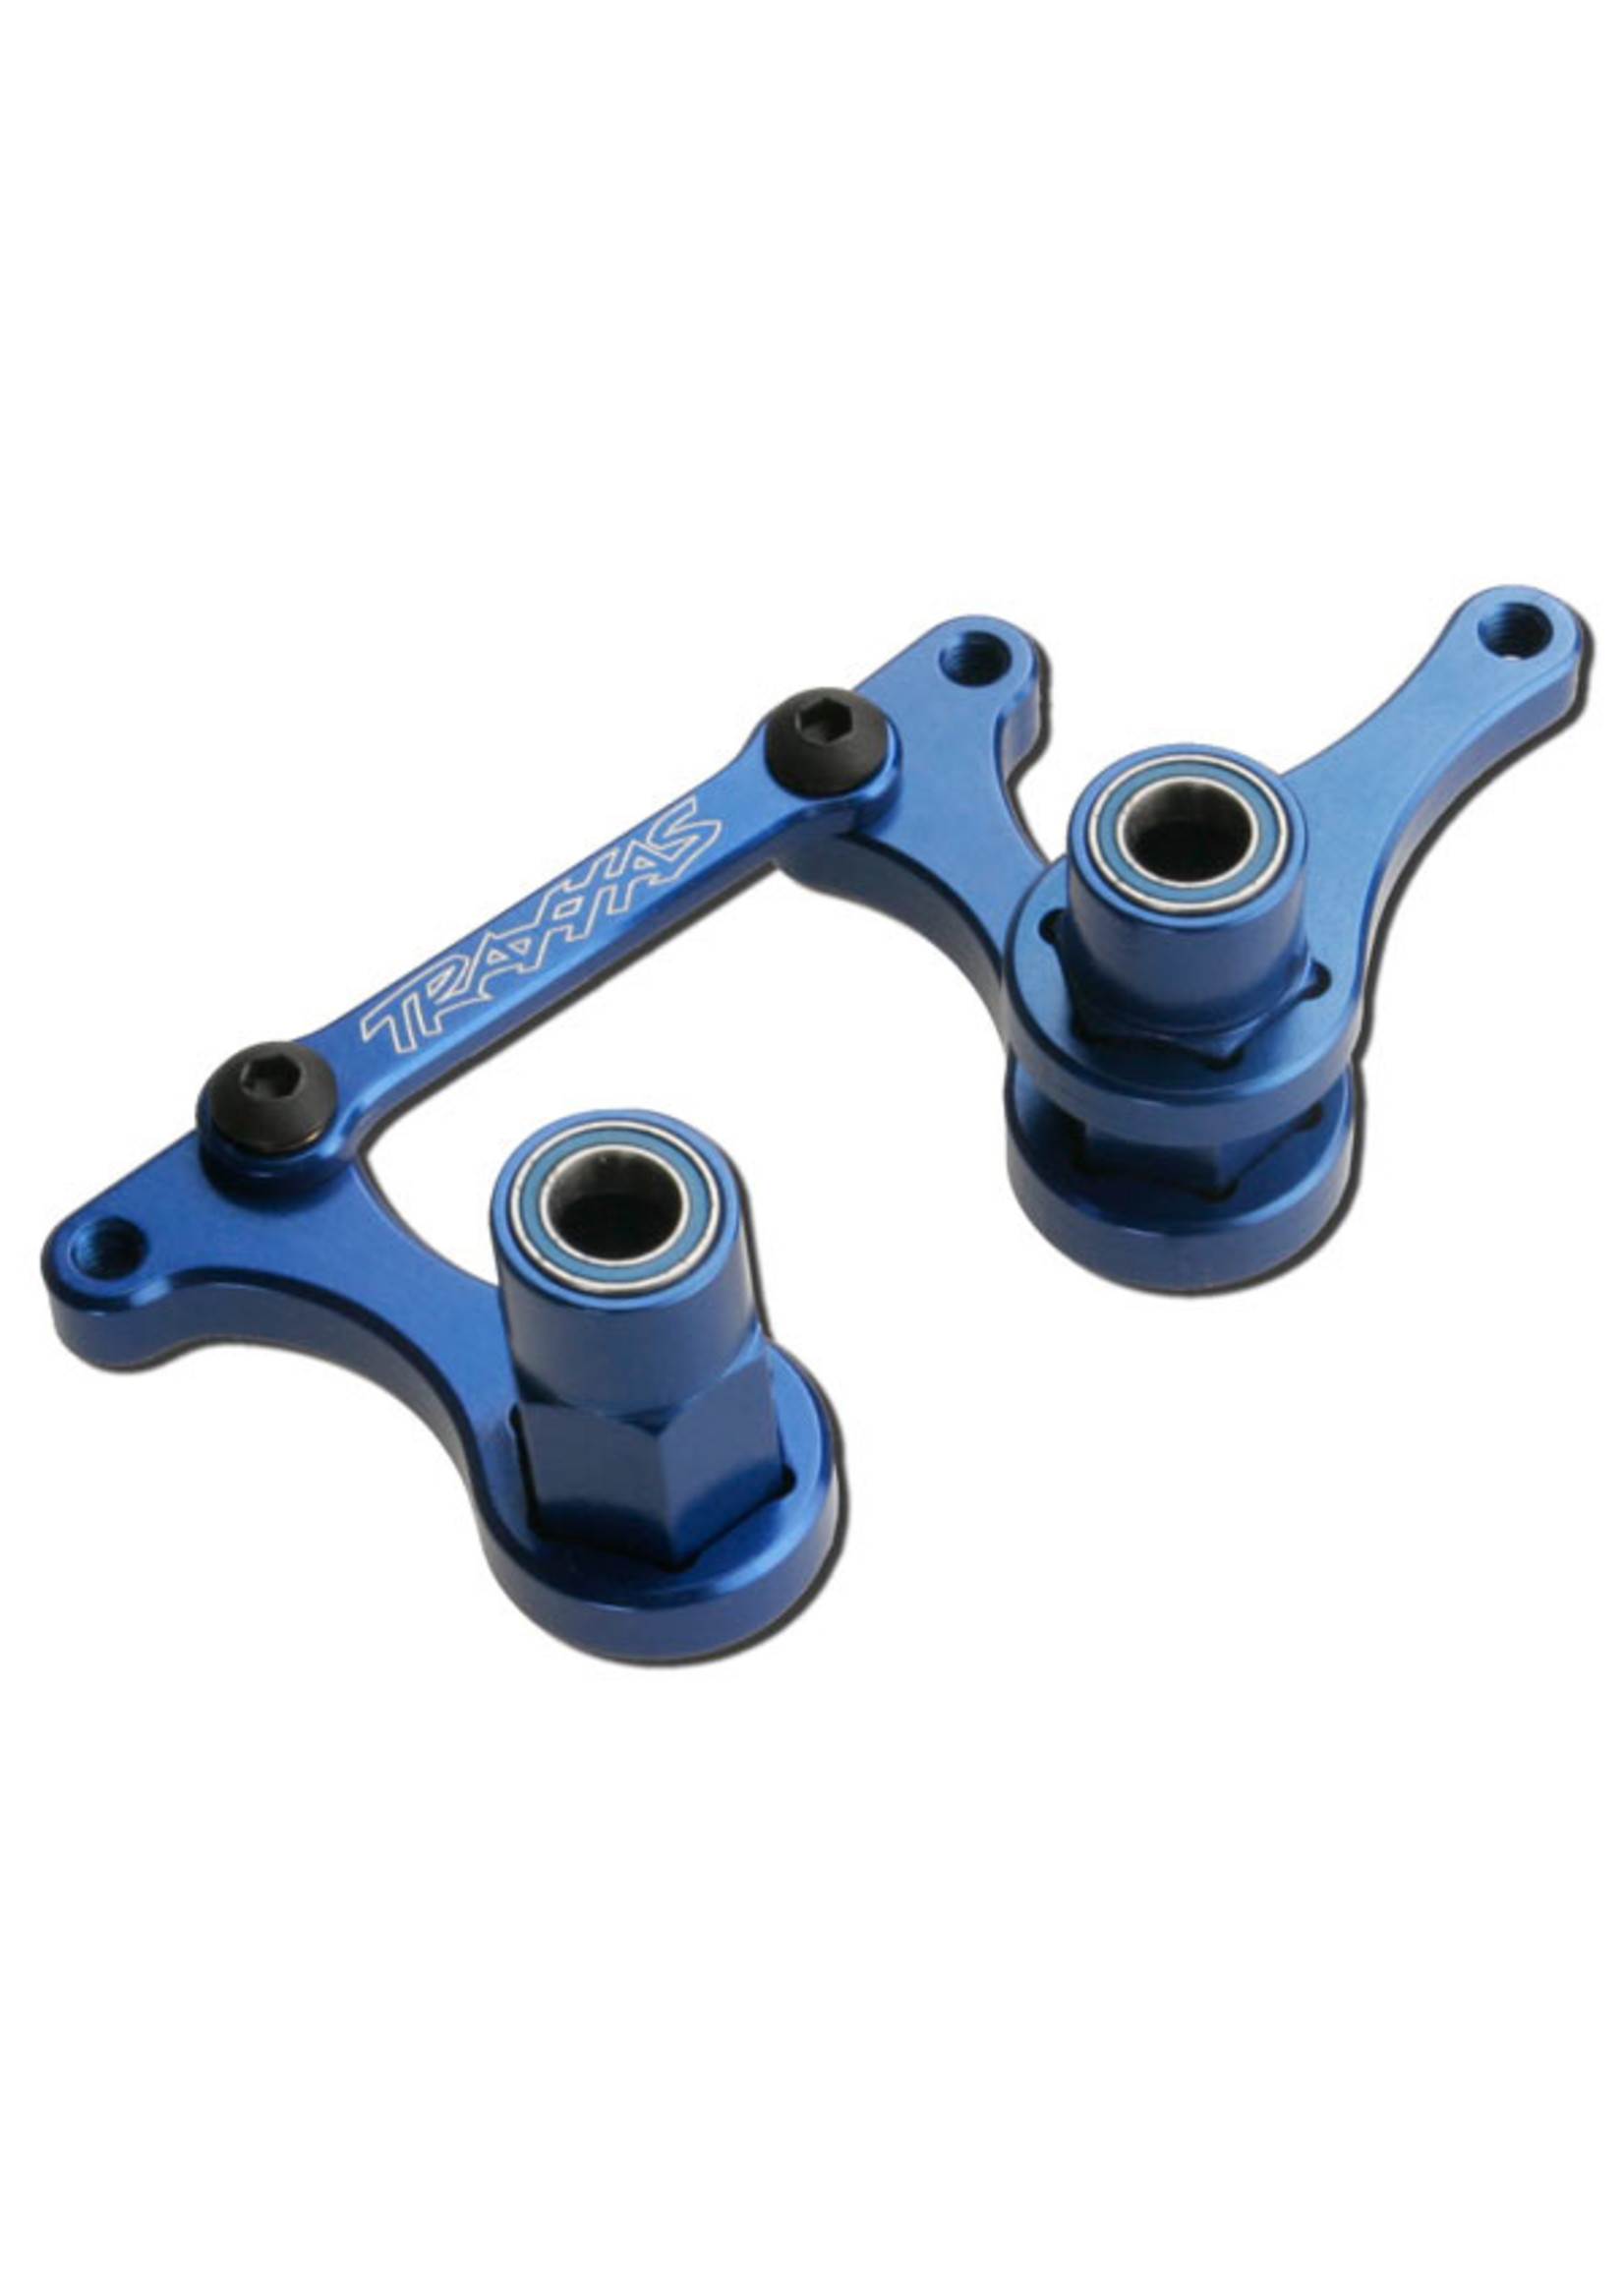 Traxxas 3743A - Aluminum Drag Link Steering Bellcranks - Blue